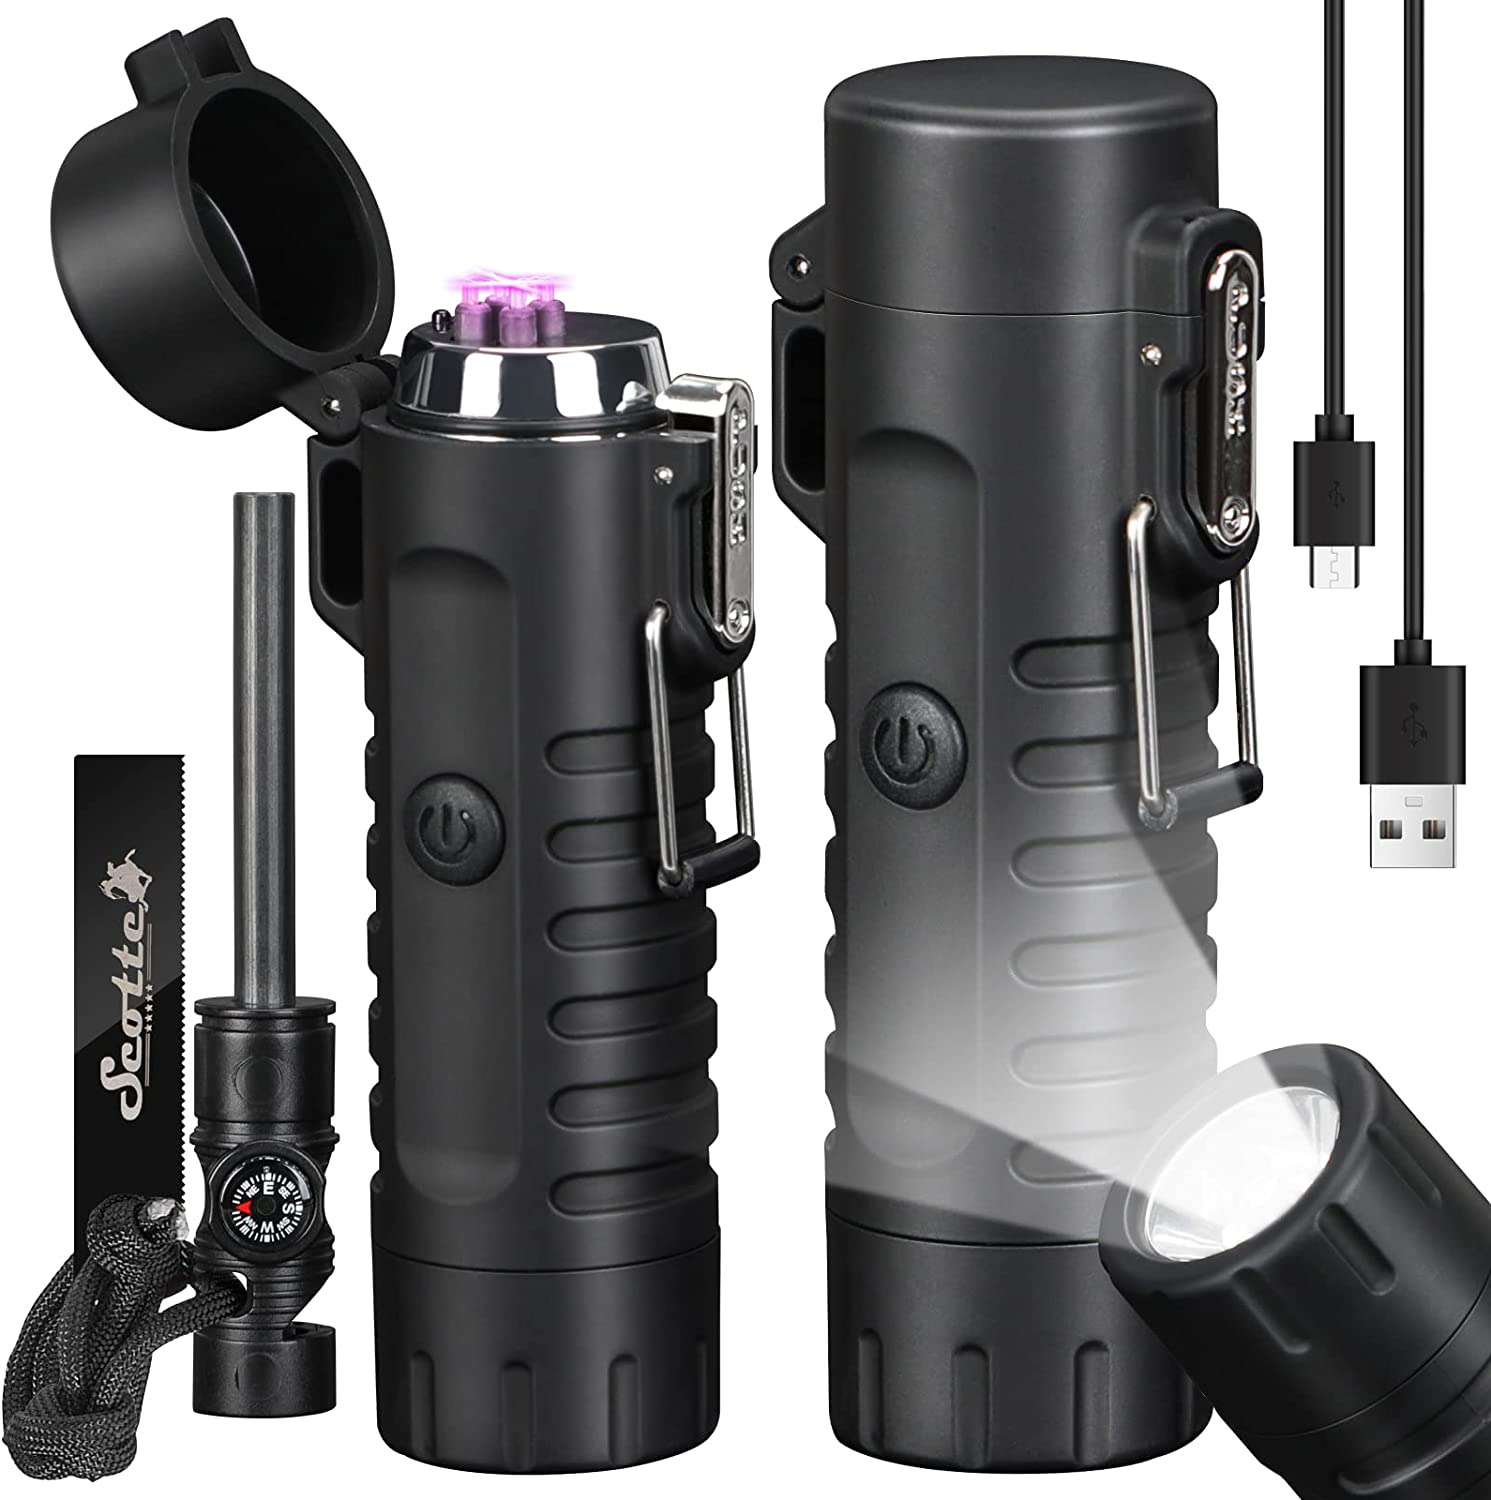 Plasma Windproof Arc Lighter Electric Lighter and LED Flashlight - 2 in 1 (Black